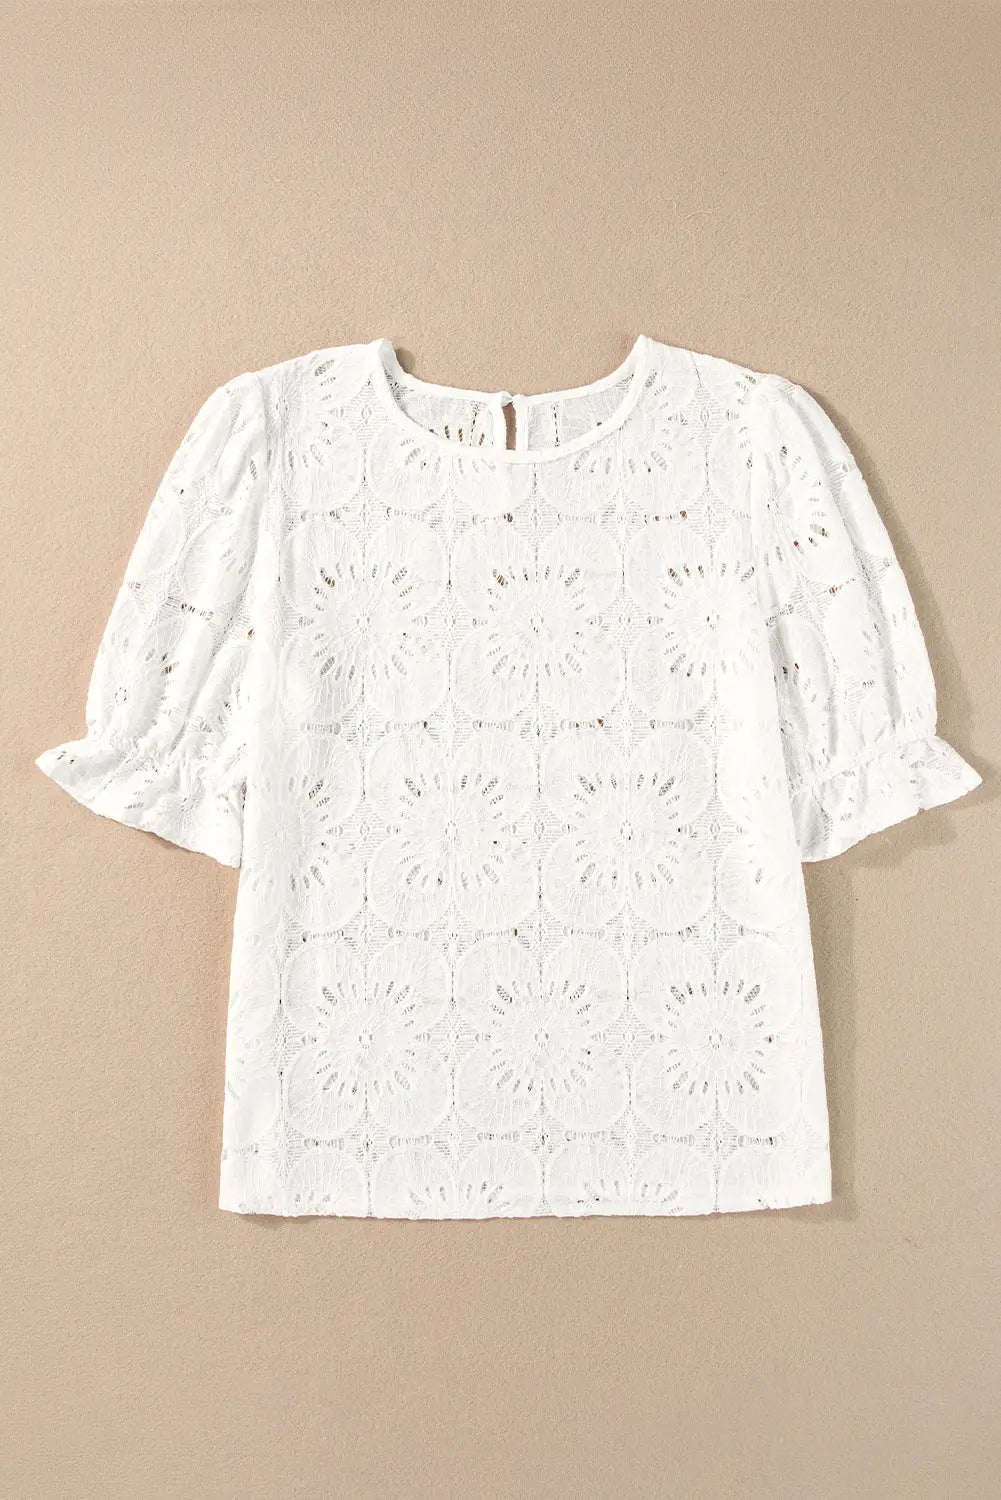 White flower eyelet jacquard top - tops/blouses & shirts